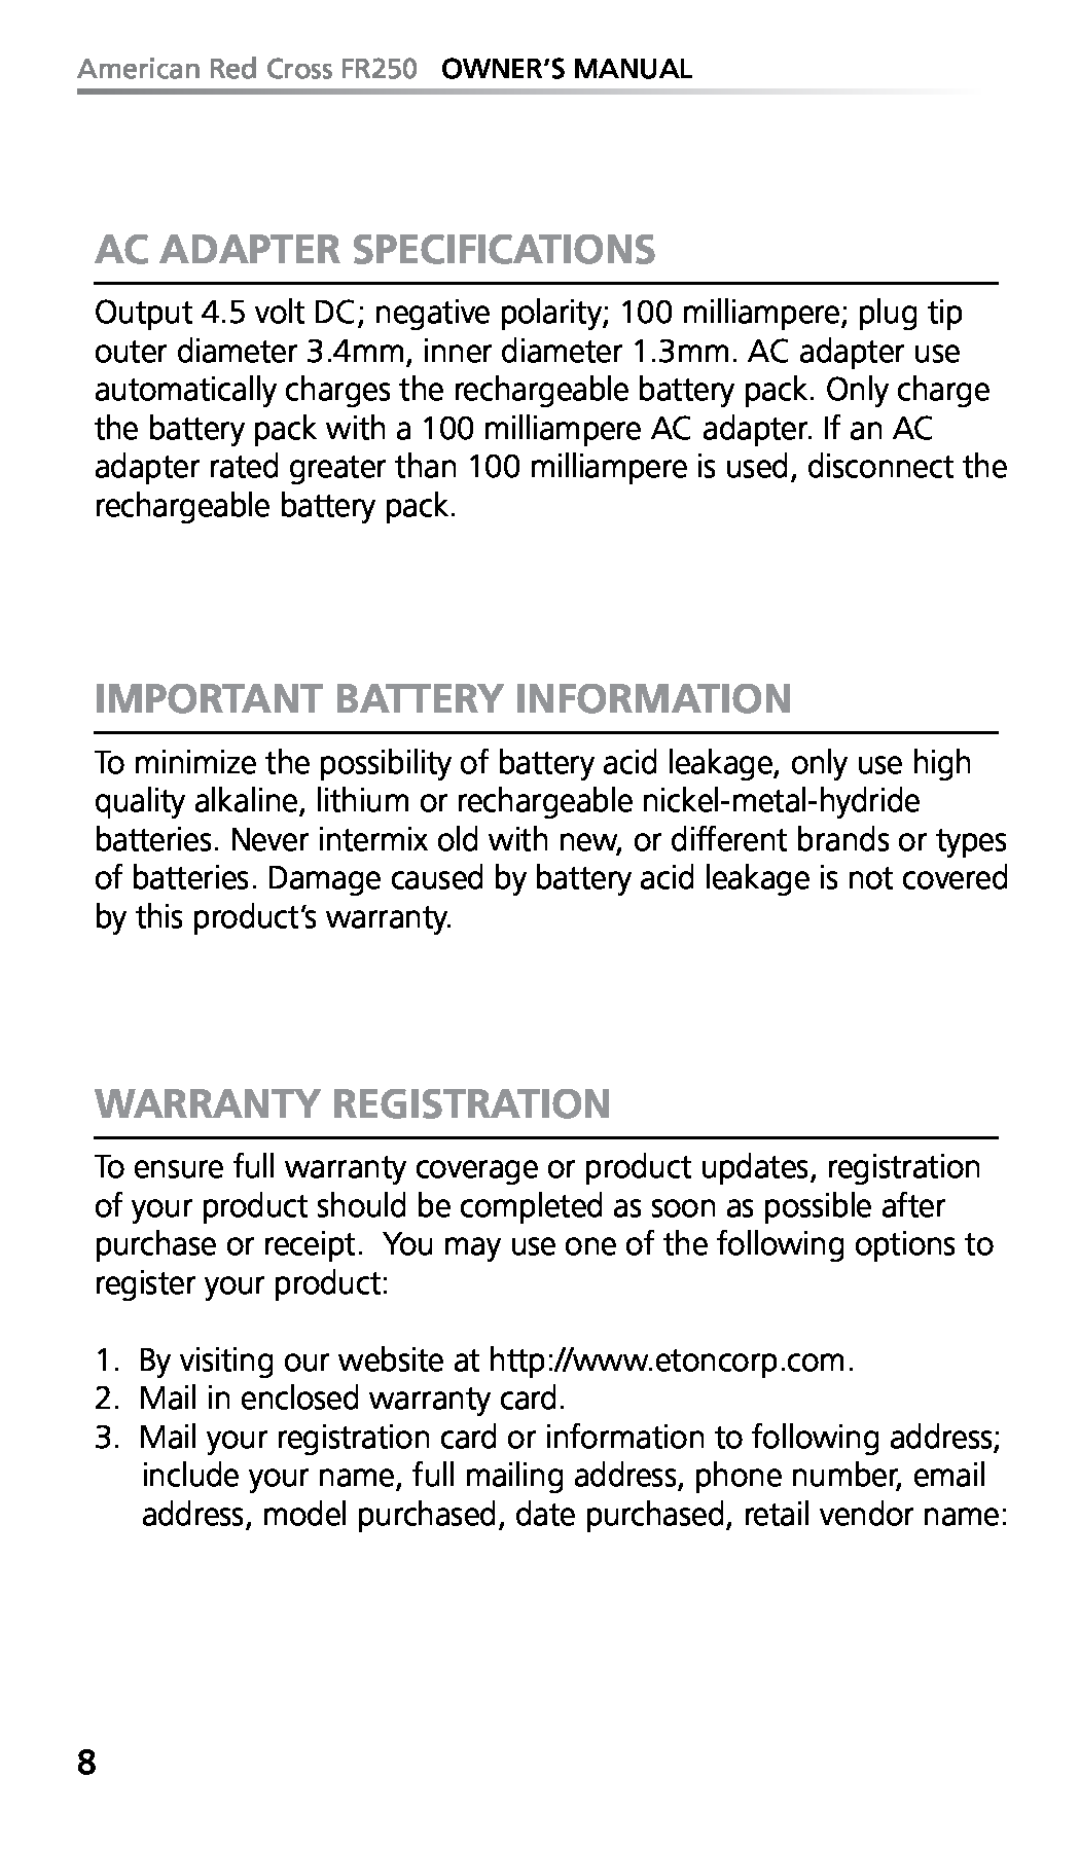 Eton FR250 owner manual Ac Adapter Specifications, Important Battery Information, Warranty Registration 